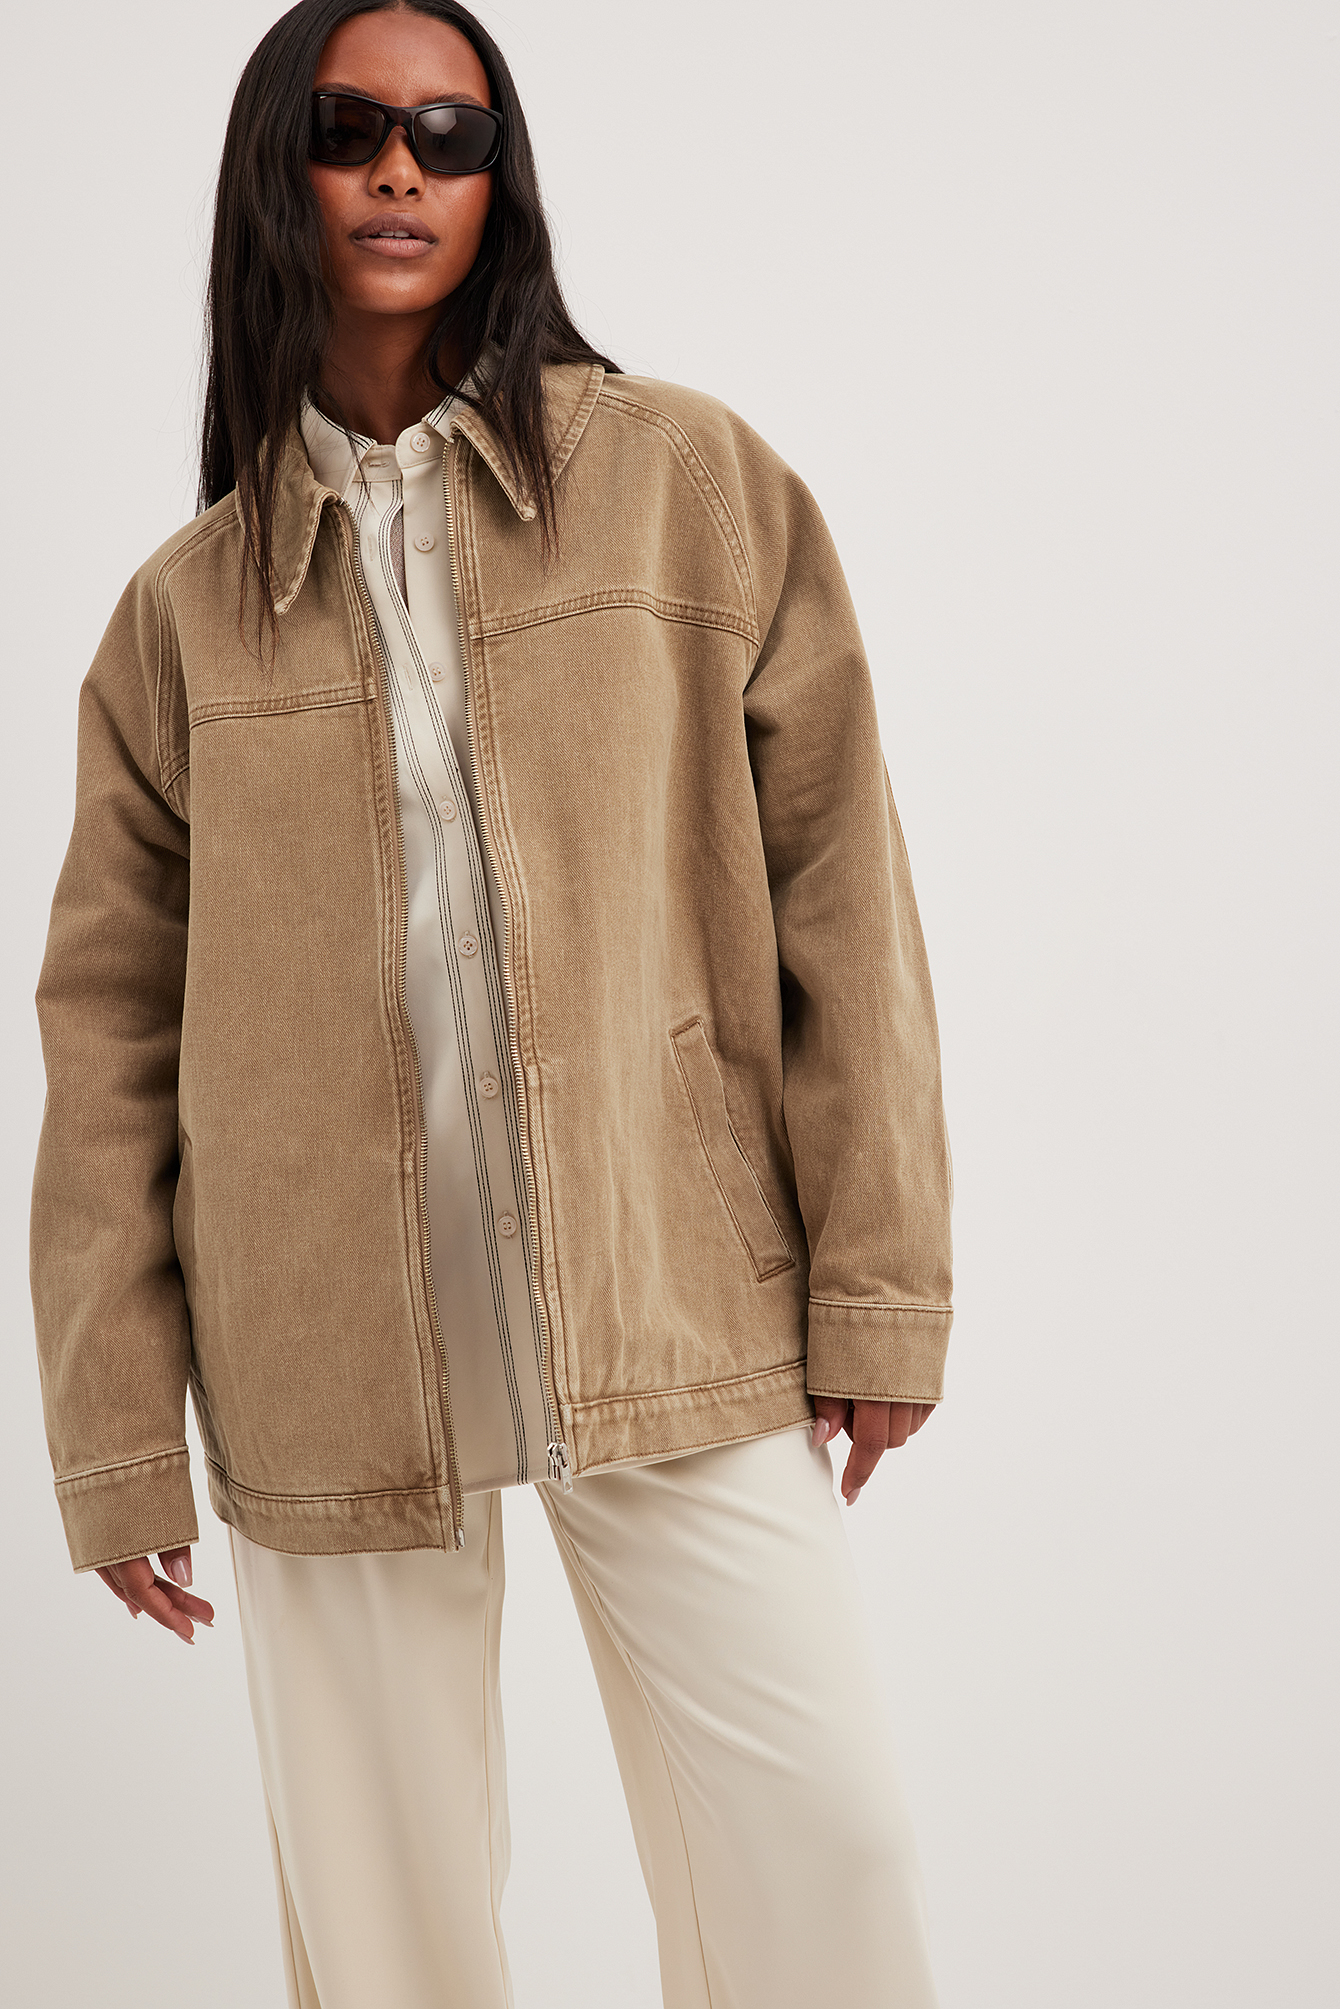 CELIO Jackets : Buy CELIO Solid Brown Long Sleeves Denim Jacket Online |  Nykaa Fashion